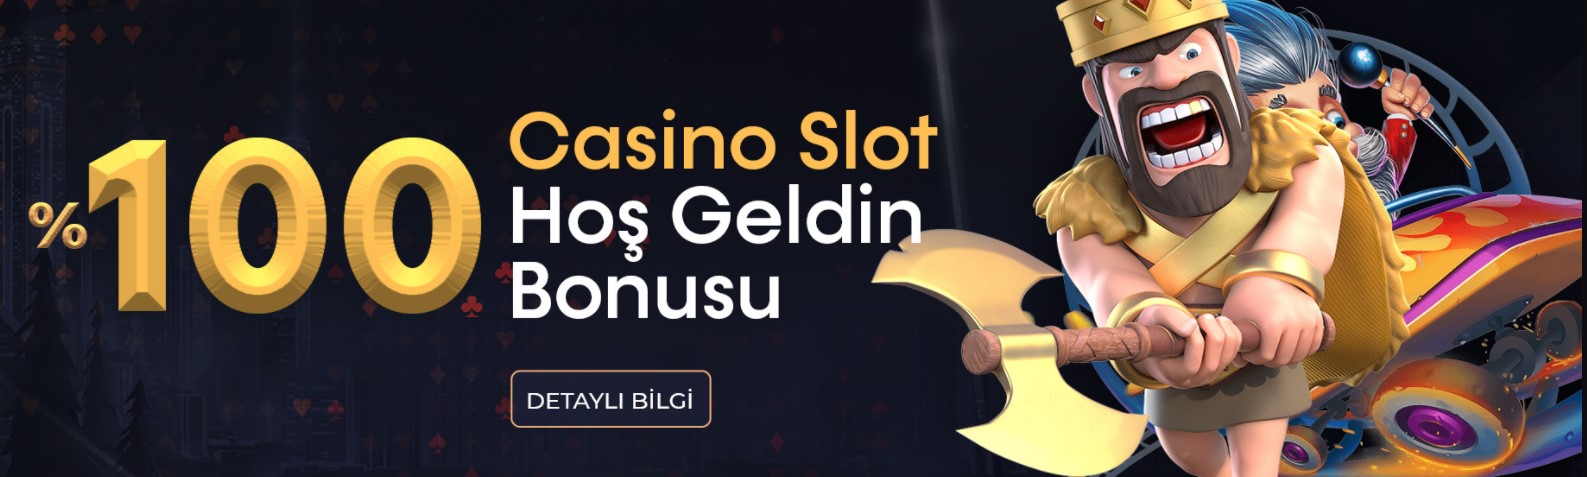 Lordcasino Casino